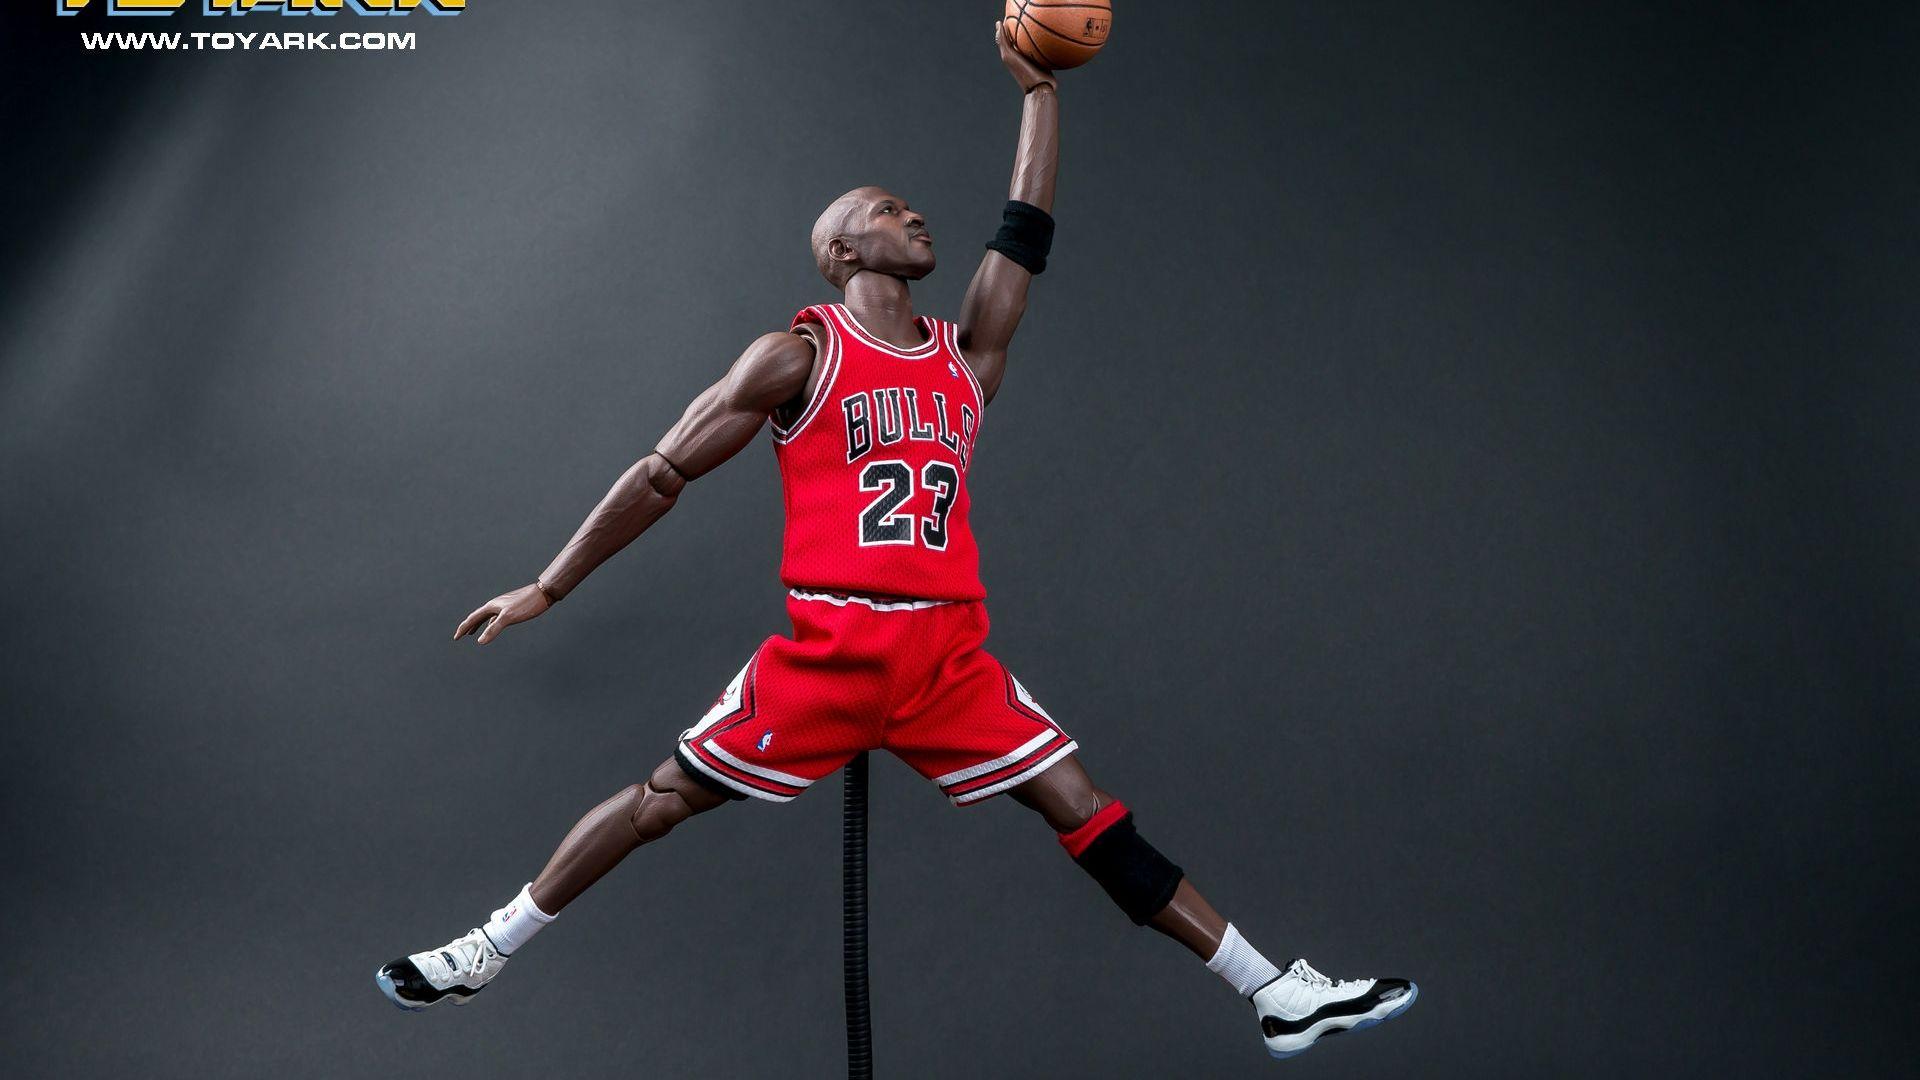 Jordan Basketball Wallpapers - Top Free Jordan Basketball Backgrounds -  WallpaperAccess